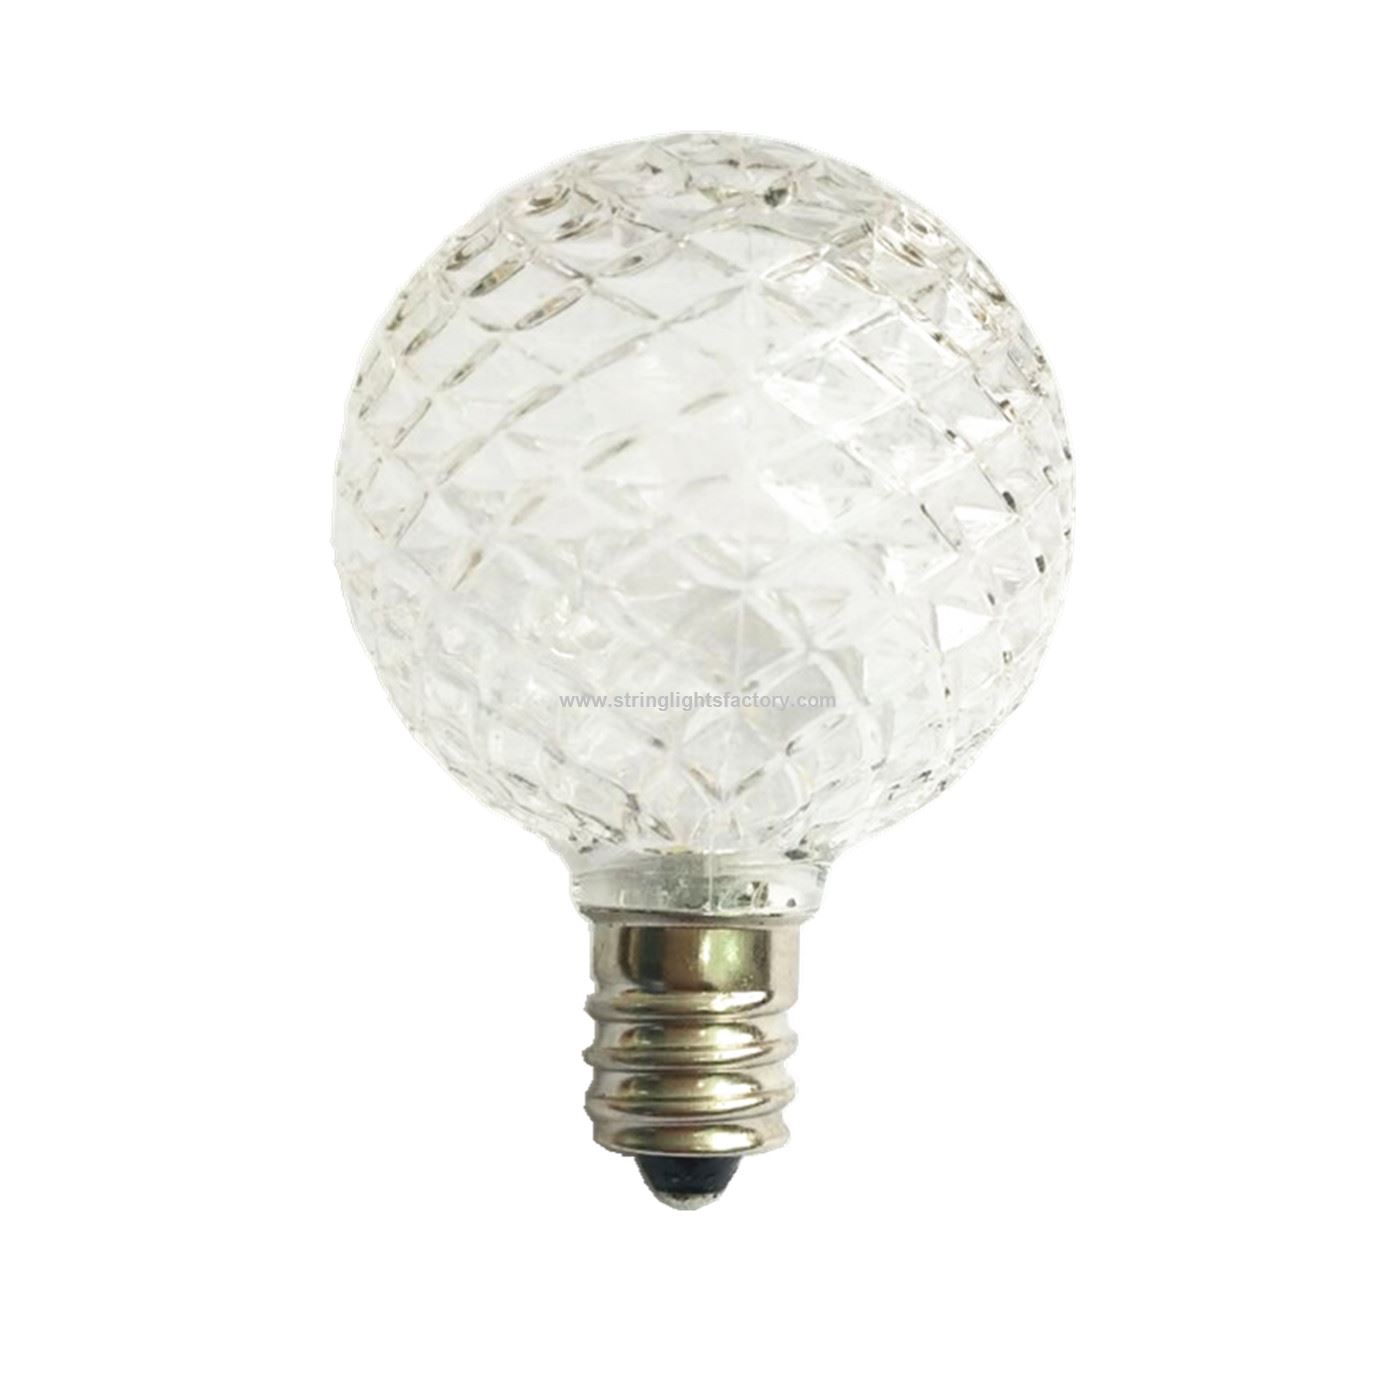 Fairy String Light Replacement Bulb G40 White Color Bulb Diamond Cut Light Bulb